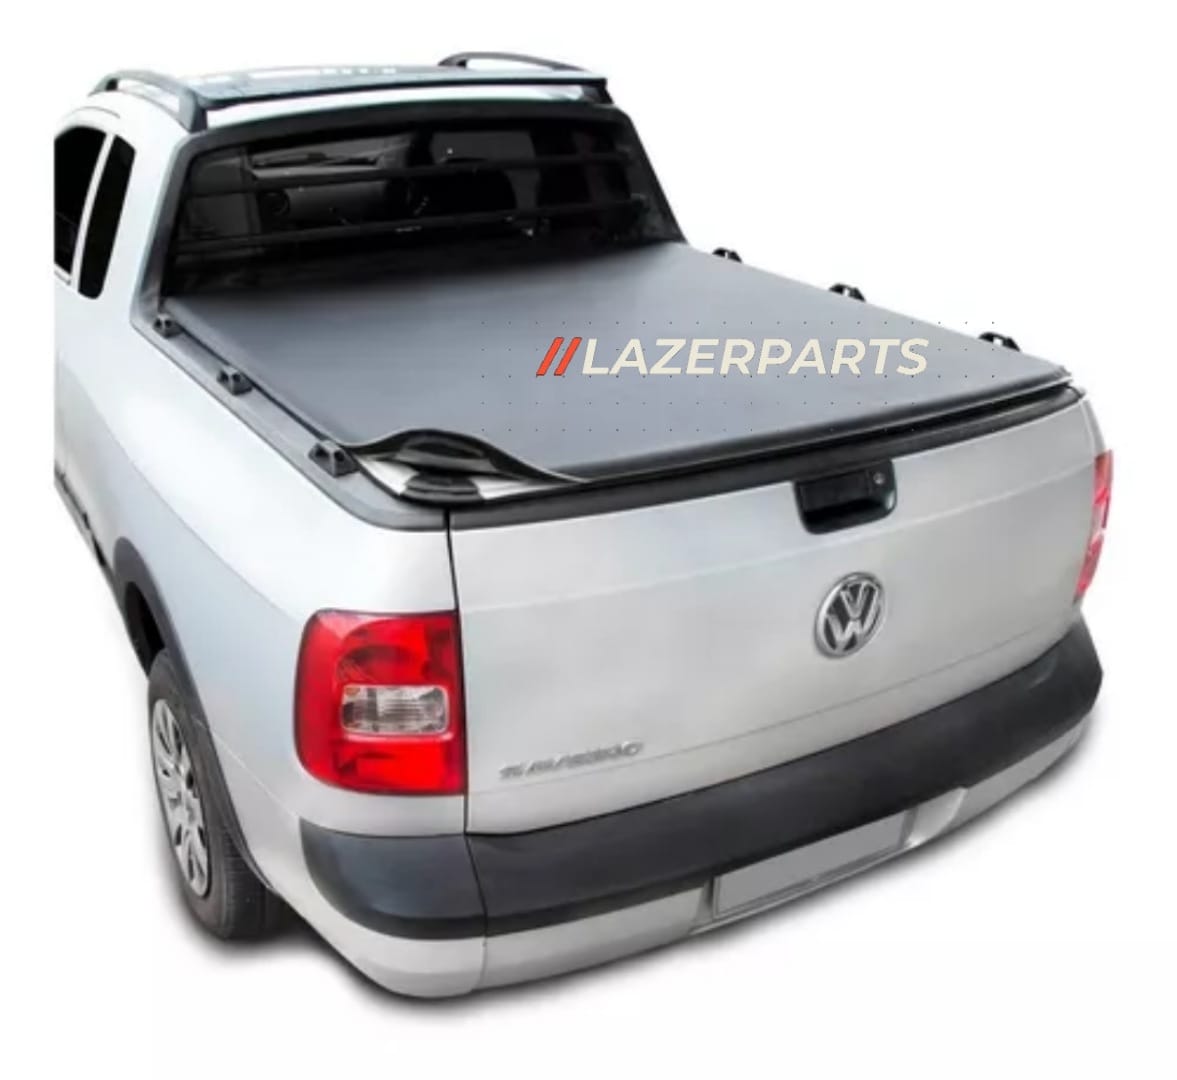 Juego de tapa Aros para Volkswagen Saveiro -Aro 14' – LazerParts